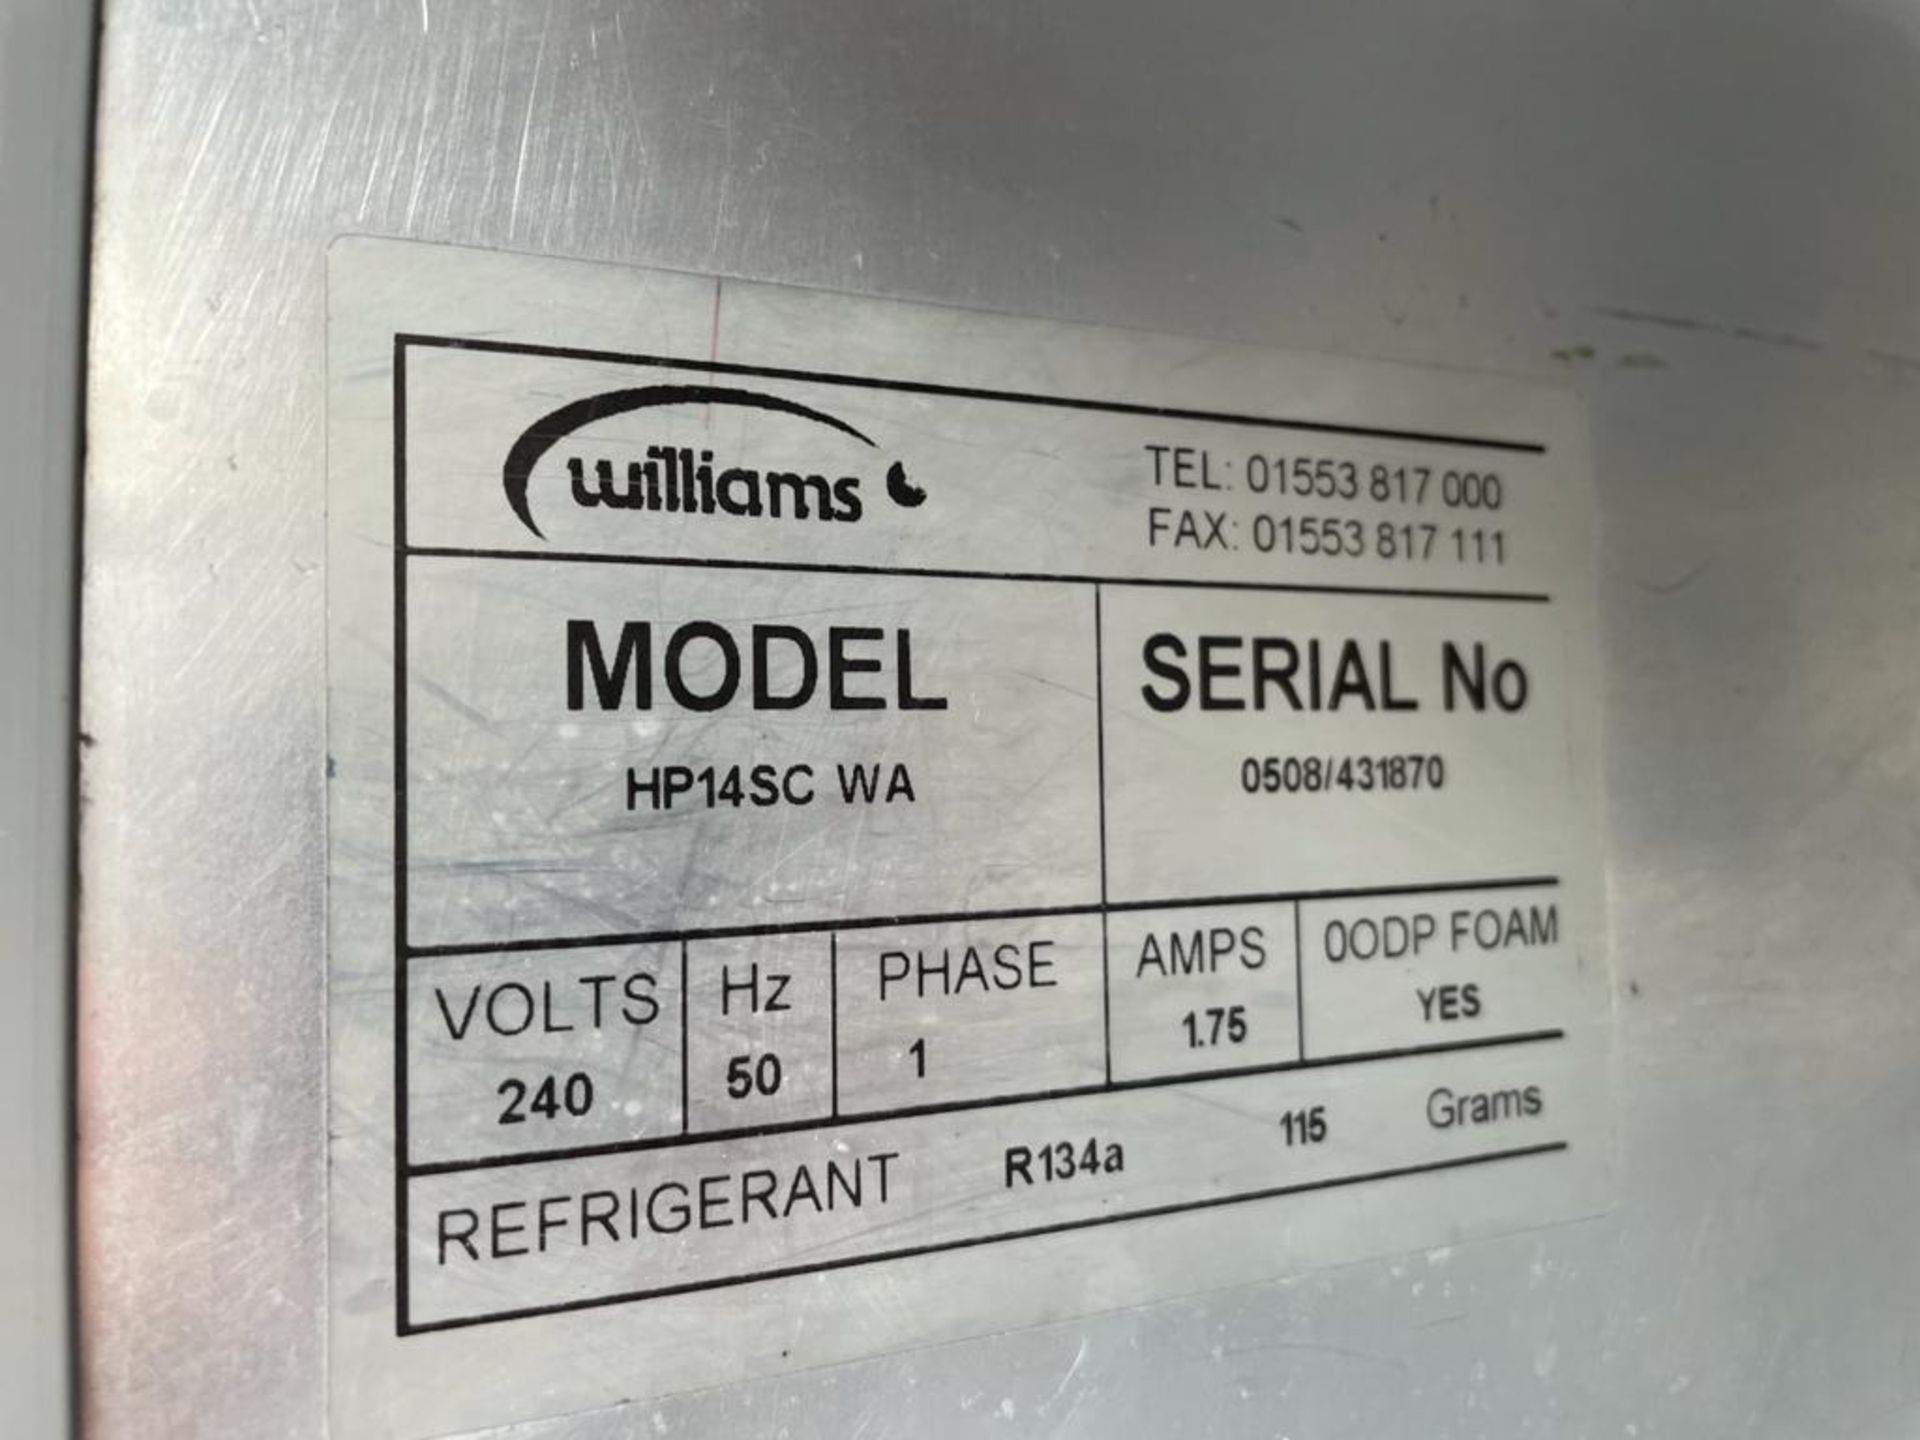 1 x Williams Upright Refrigerator - Model HP14SC - CL667 - Location: Brighton, Sussex, - Image 2 of 4